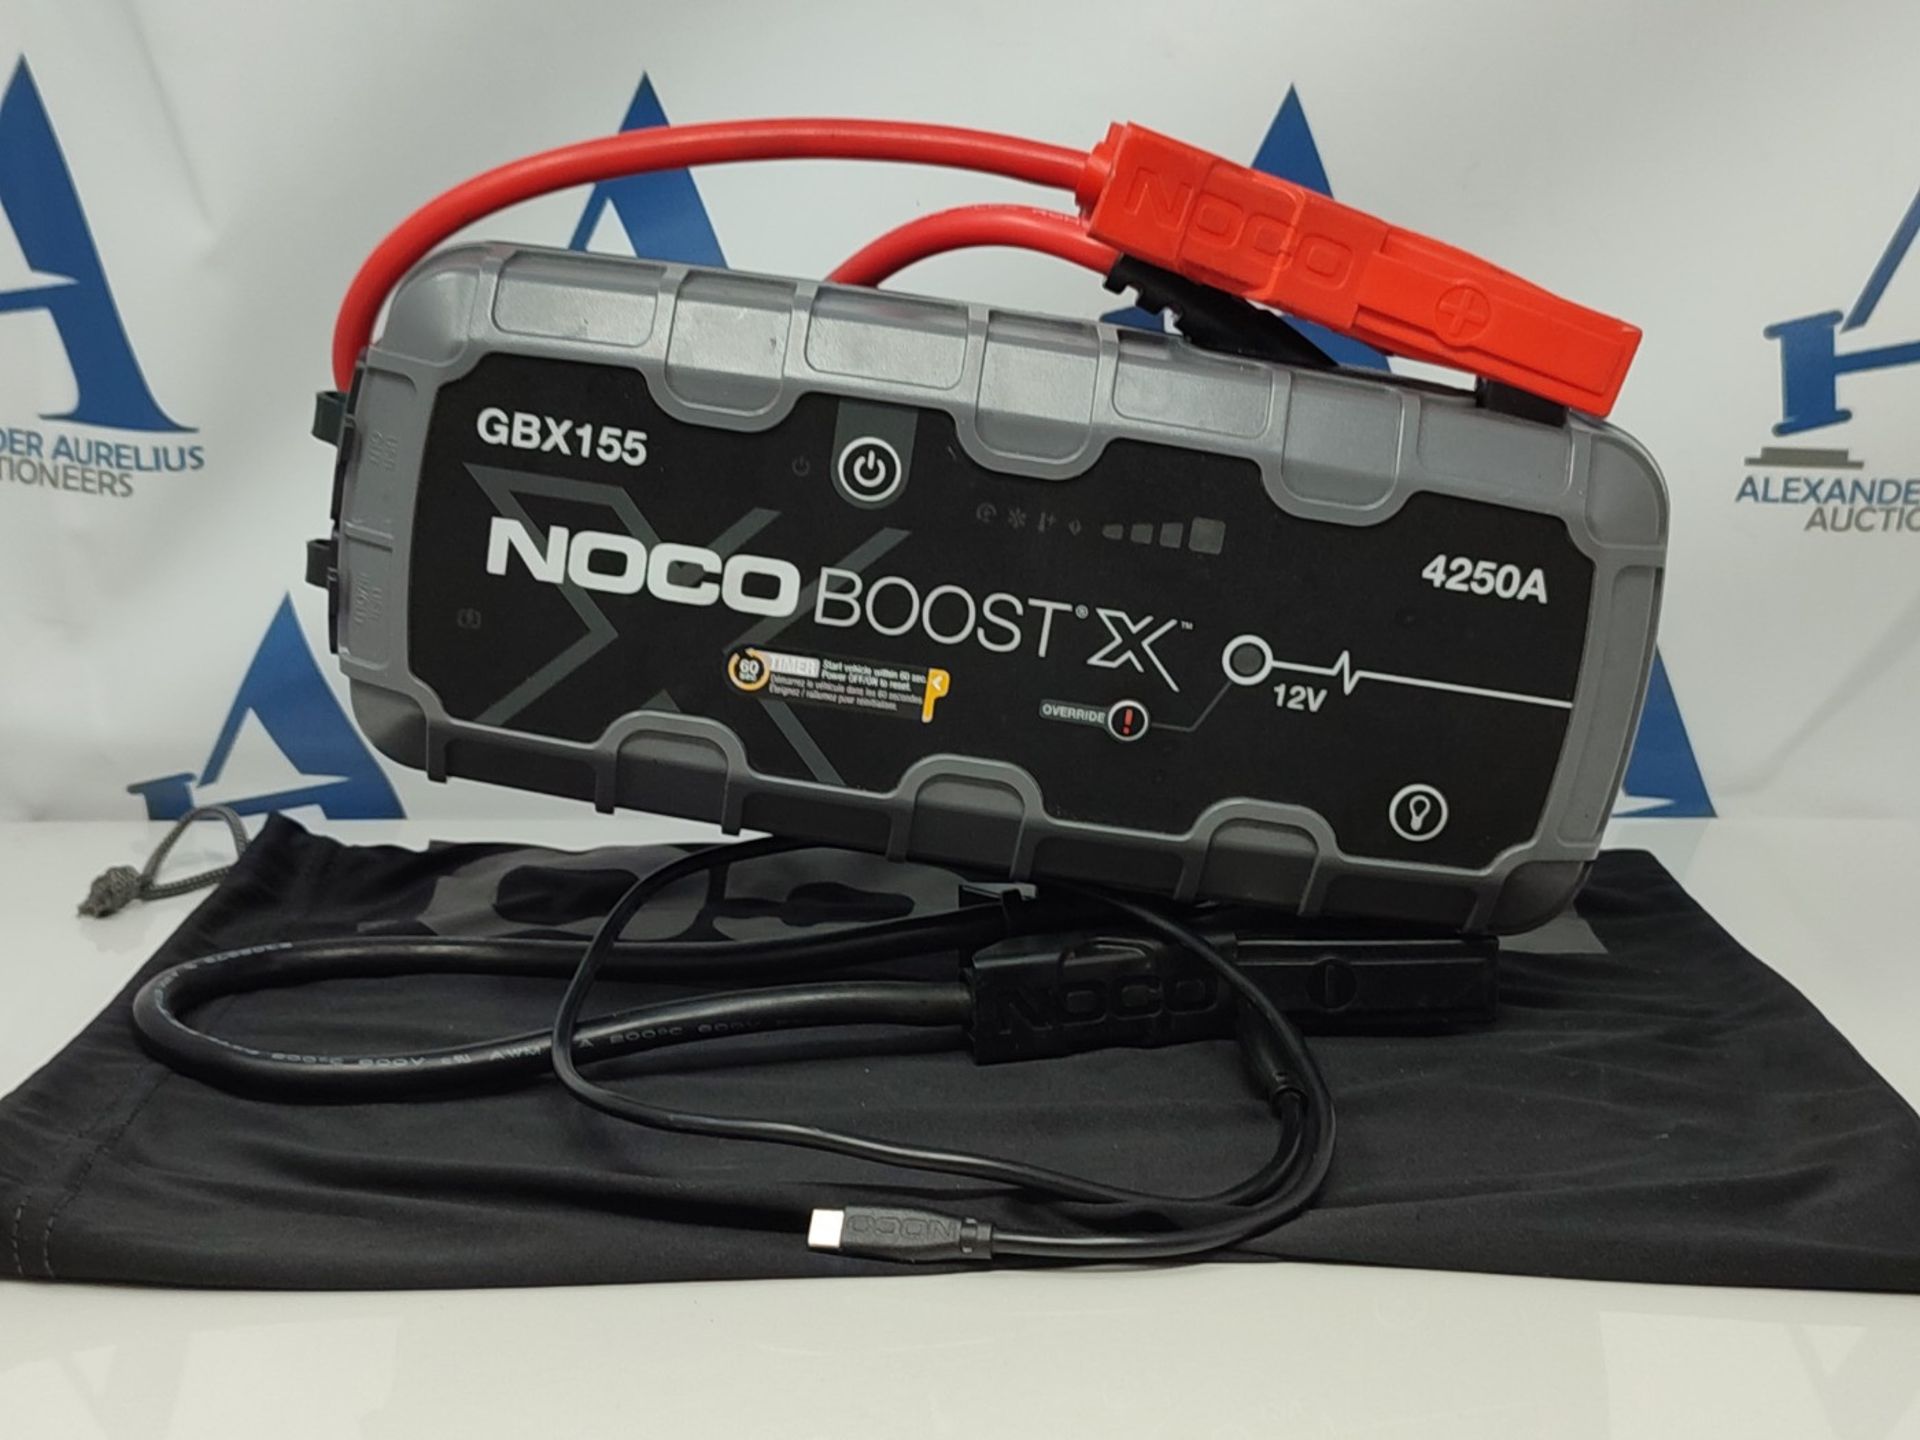 RRP £324.00 NOCO Boost X GBX155 4250A UltraSafe Car Jump Starter, Jump Starter Power Pack, 12V Bat - Image 2 of 2